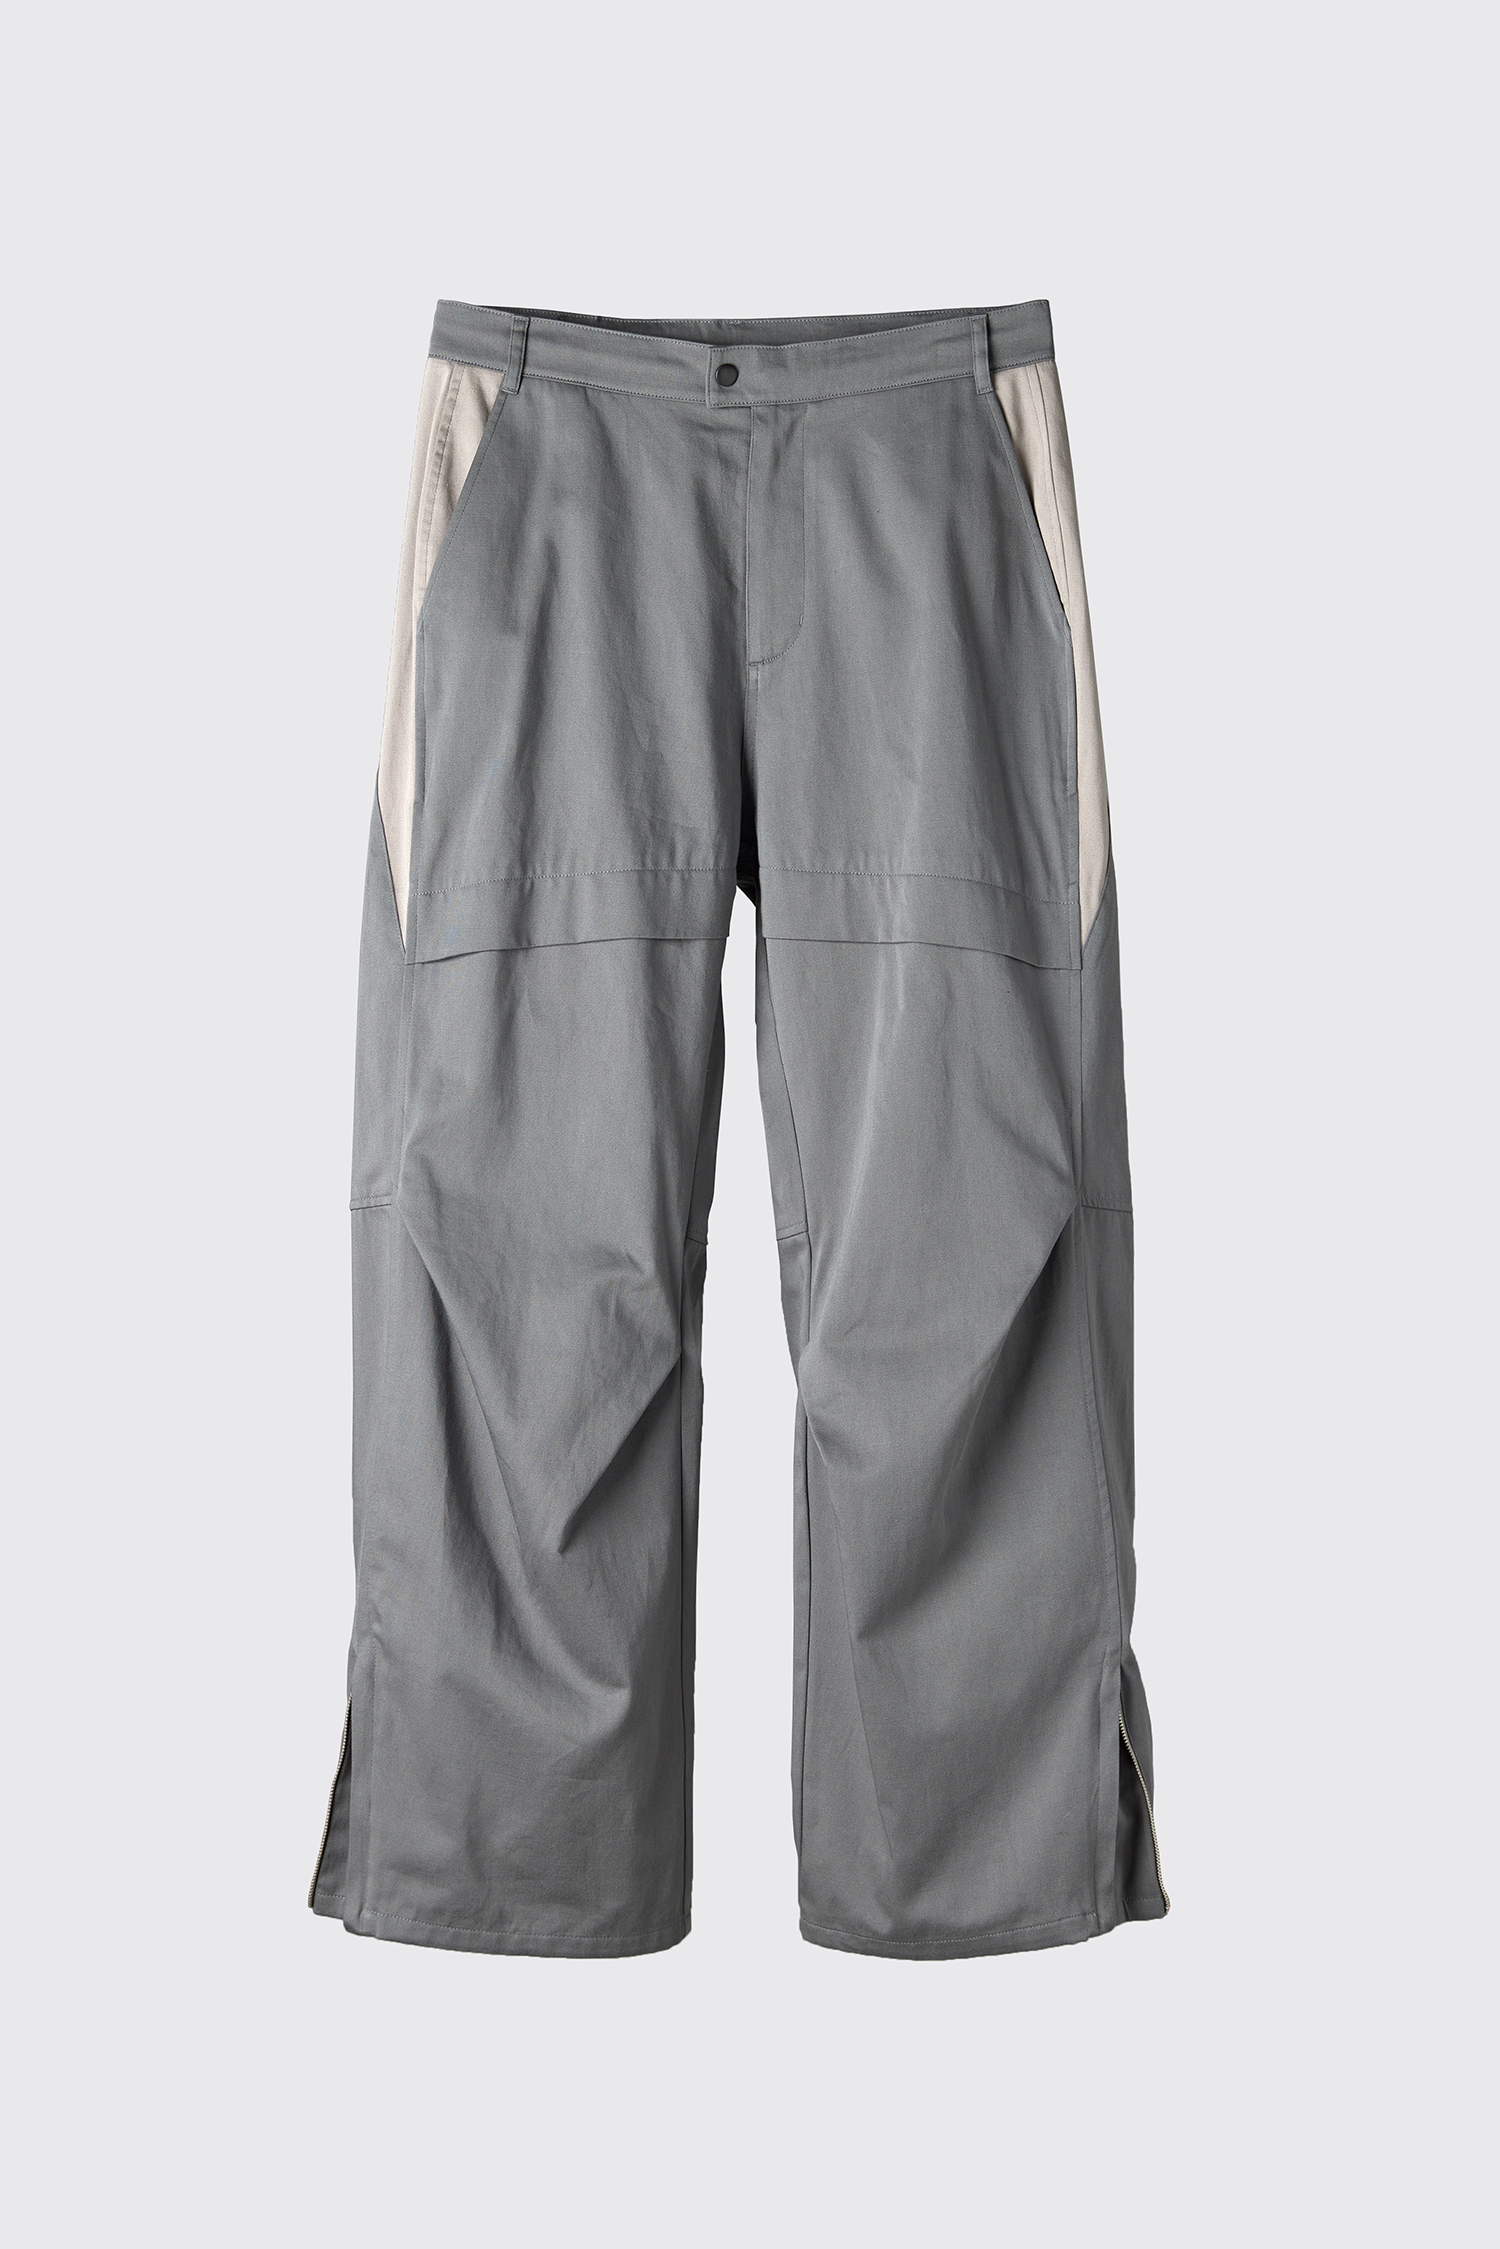 Shirring Pants Grey (Restock)